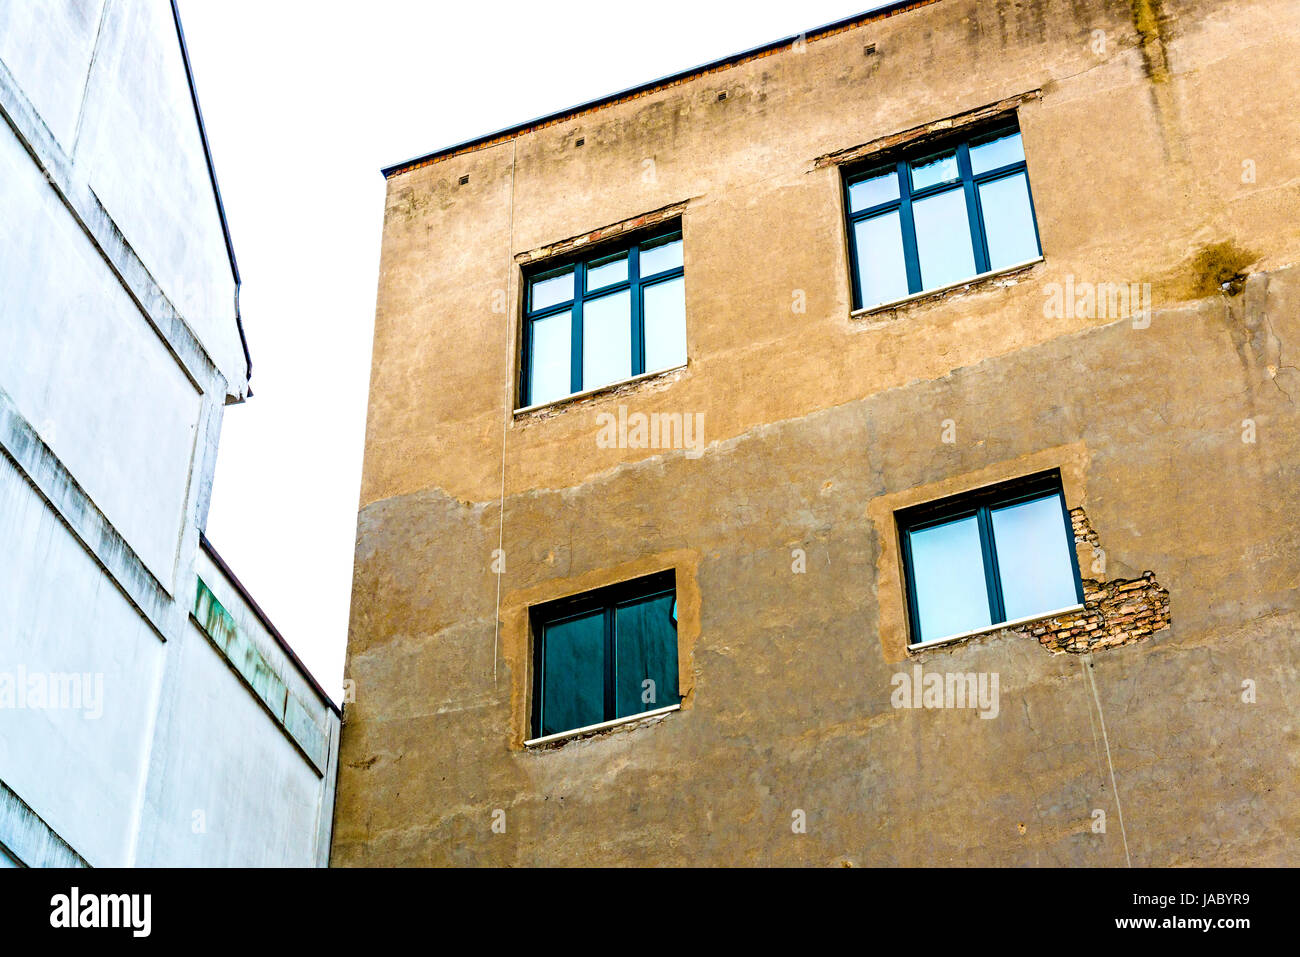 Berlino: lo sviluppo delle città, stadtentwicklung und renovierung Foto Stock